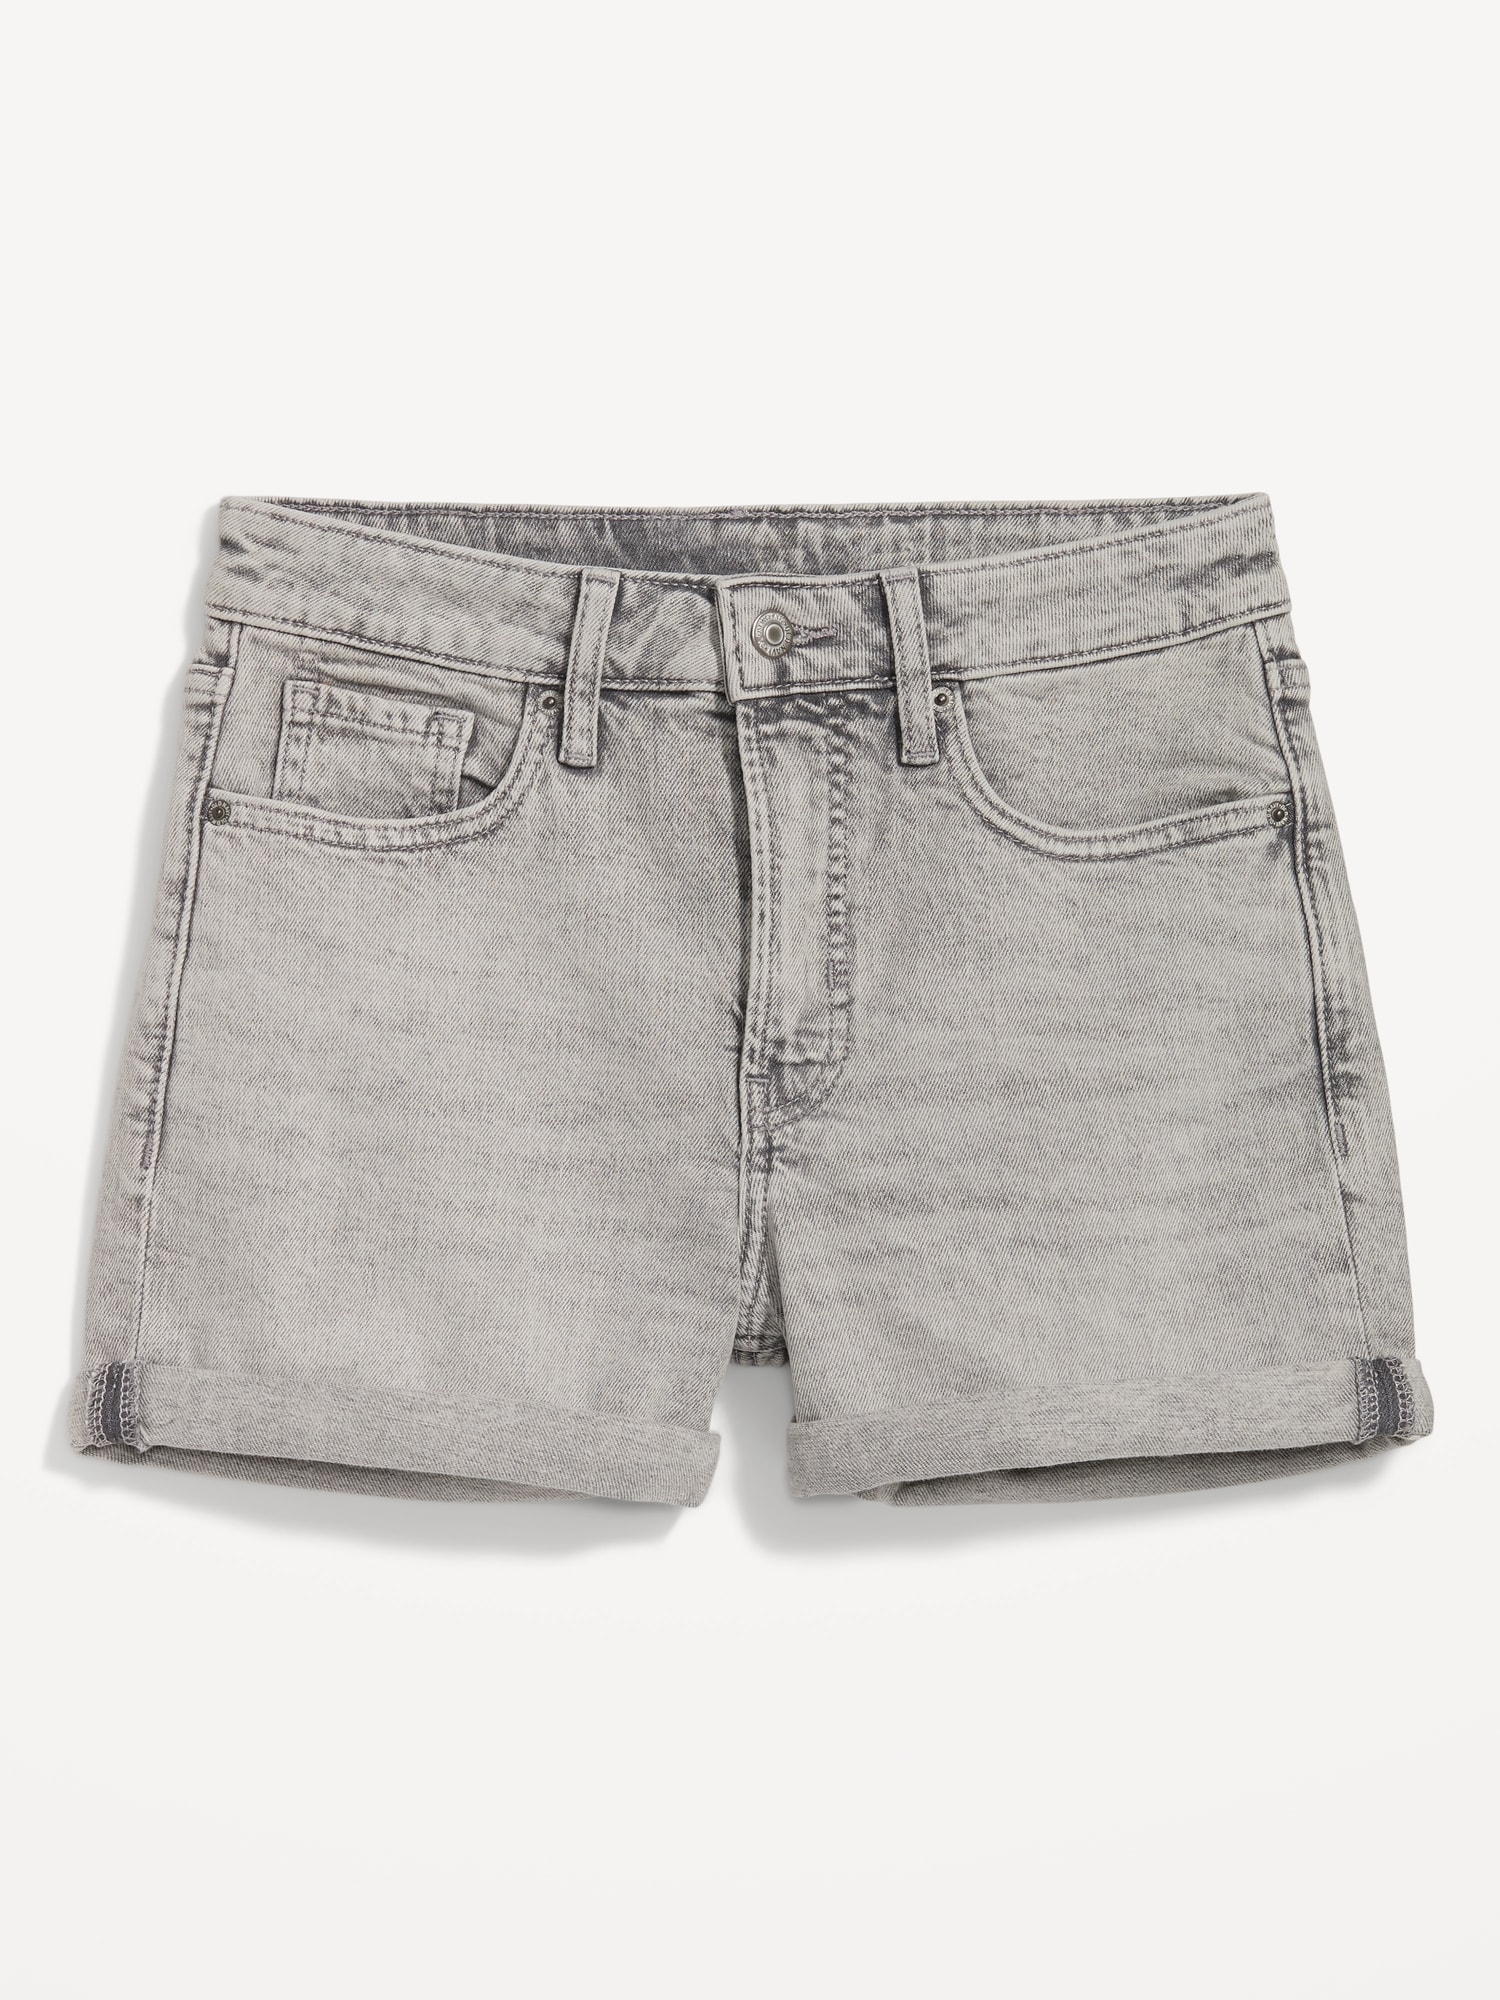 Øst Timor Mount Bank vært High-Waisted OG Straight Cuffed Gray Jean Shorts for Women -- 3-inch inseam  | Old Navy